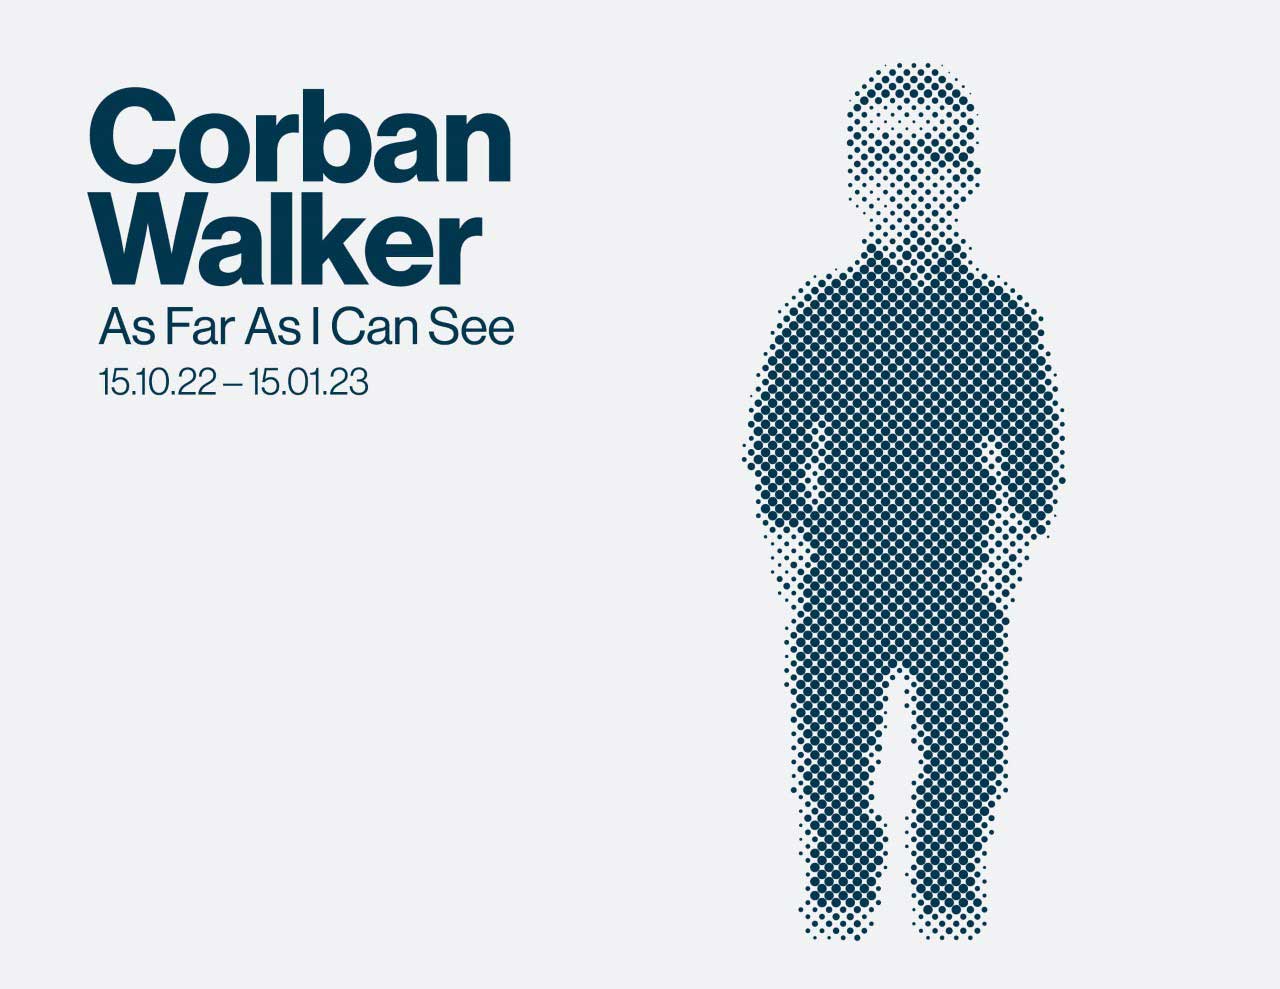 Corban Walker: As Far As I Can See